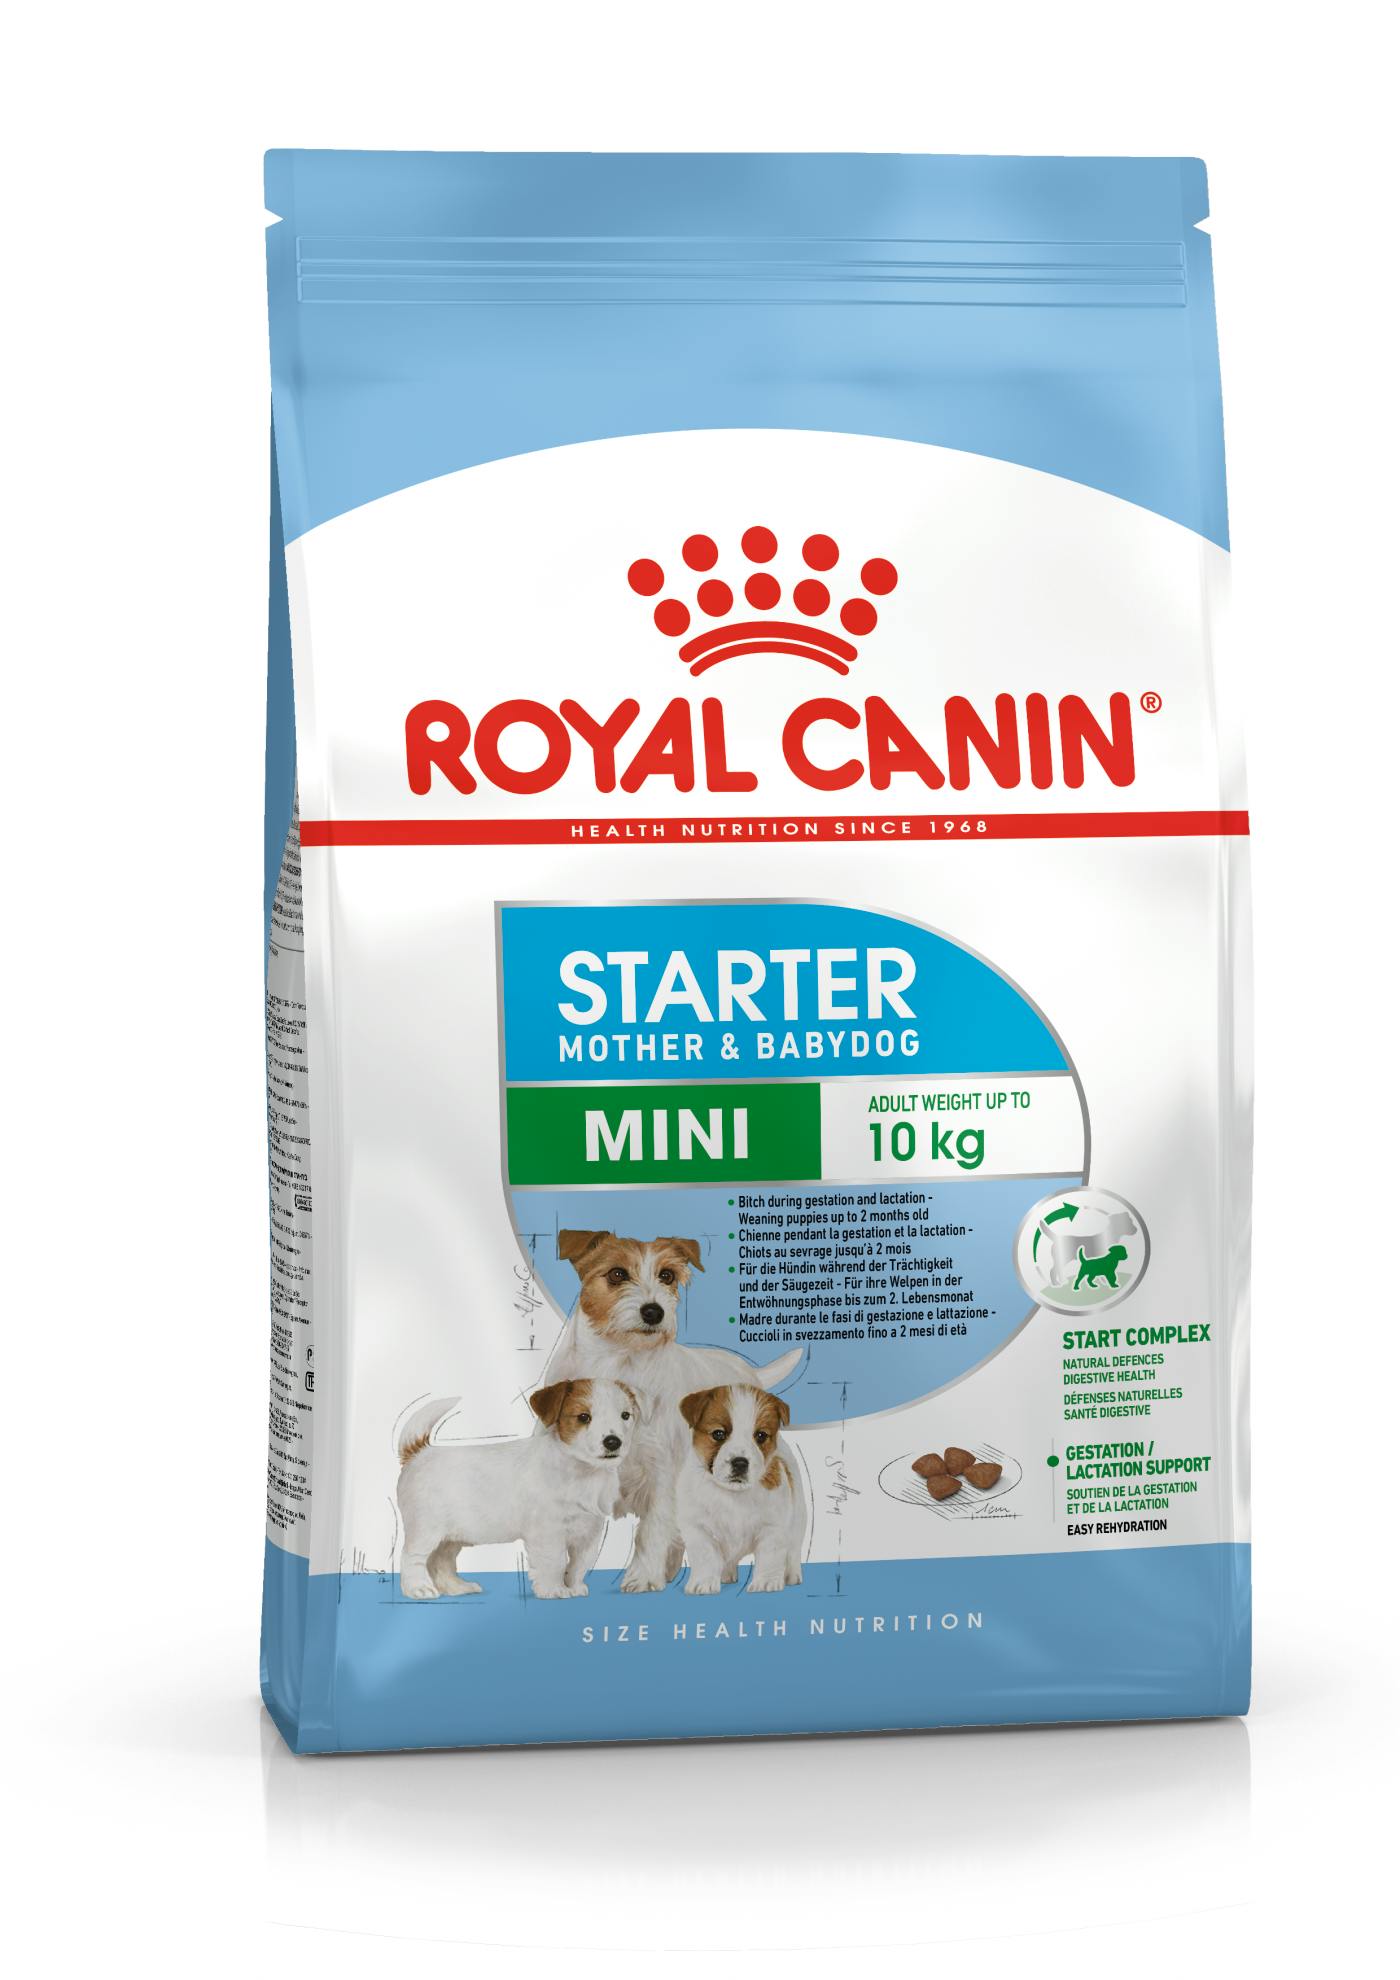 Turista Confiar orar Mini Starter dry | Royal Canin